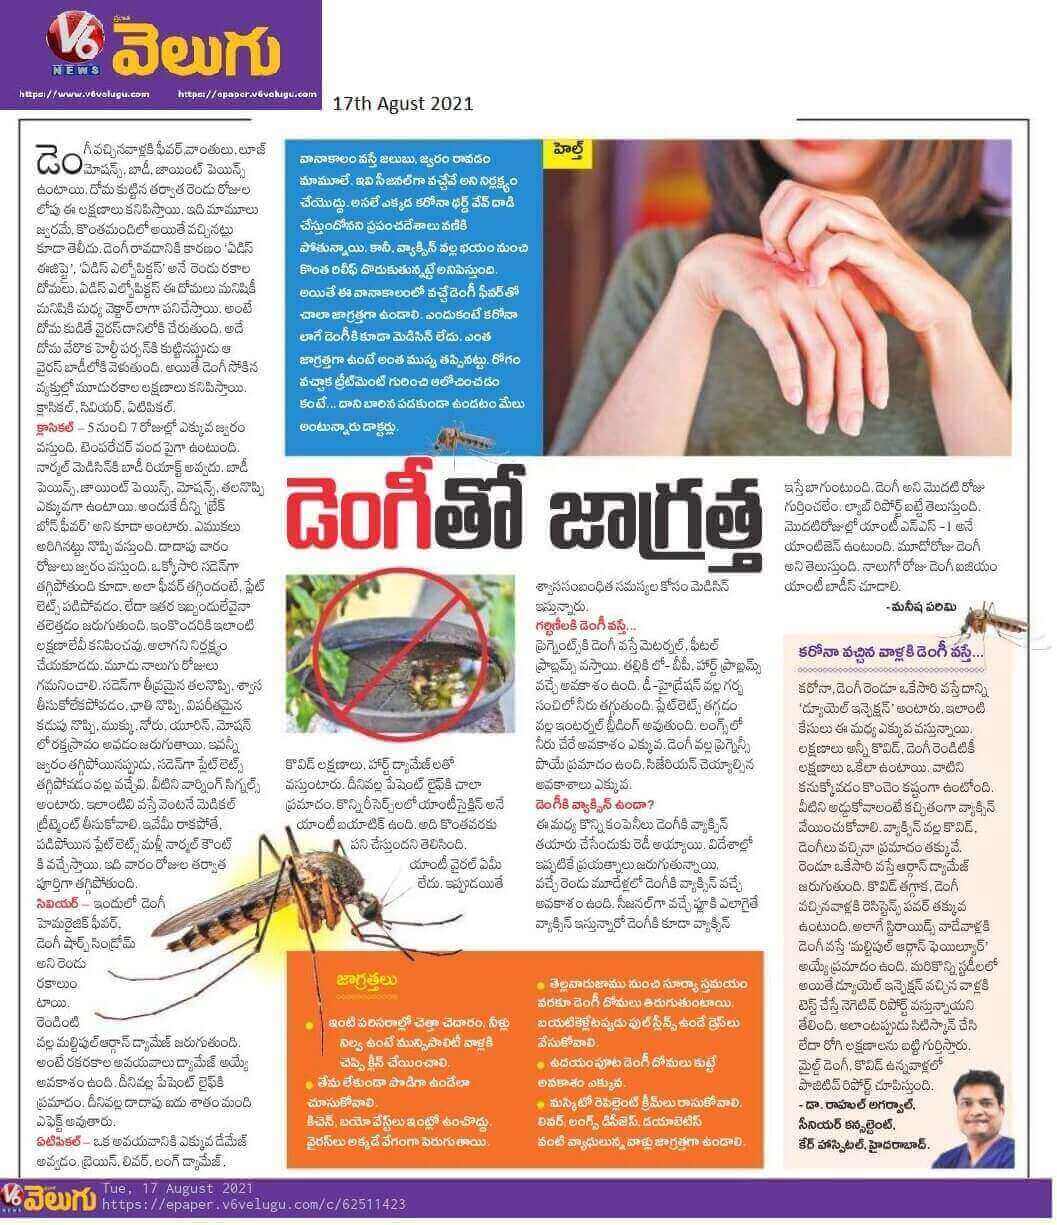 Article on Dengue Disease  by Dr. Rahul Agarwal - Sr. Consultant General Medicine